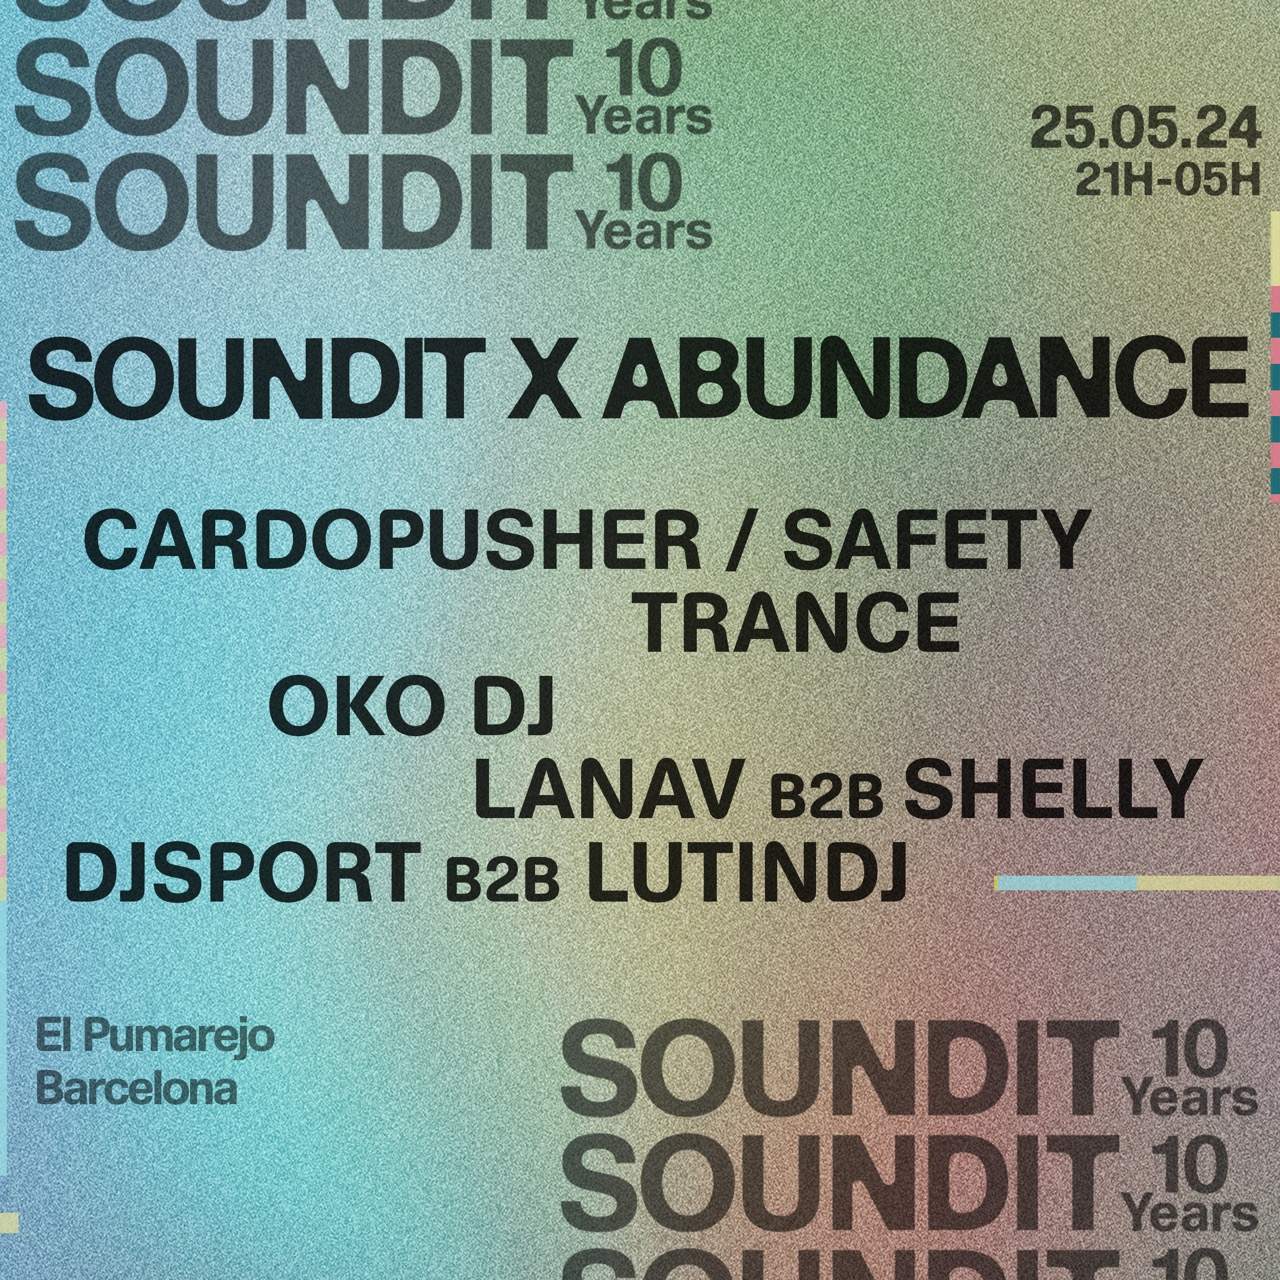 SOUNDIT x Abundance: Cardopusher / Safety Trance, OKO DJ, DjSport b2b lutindj, Lanav b2b Shelly - フライヤー表